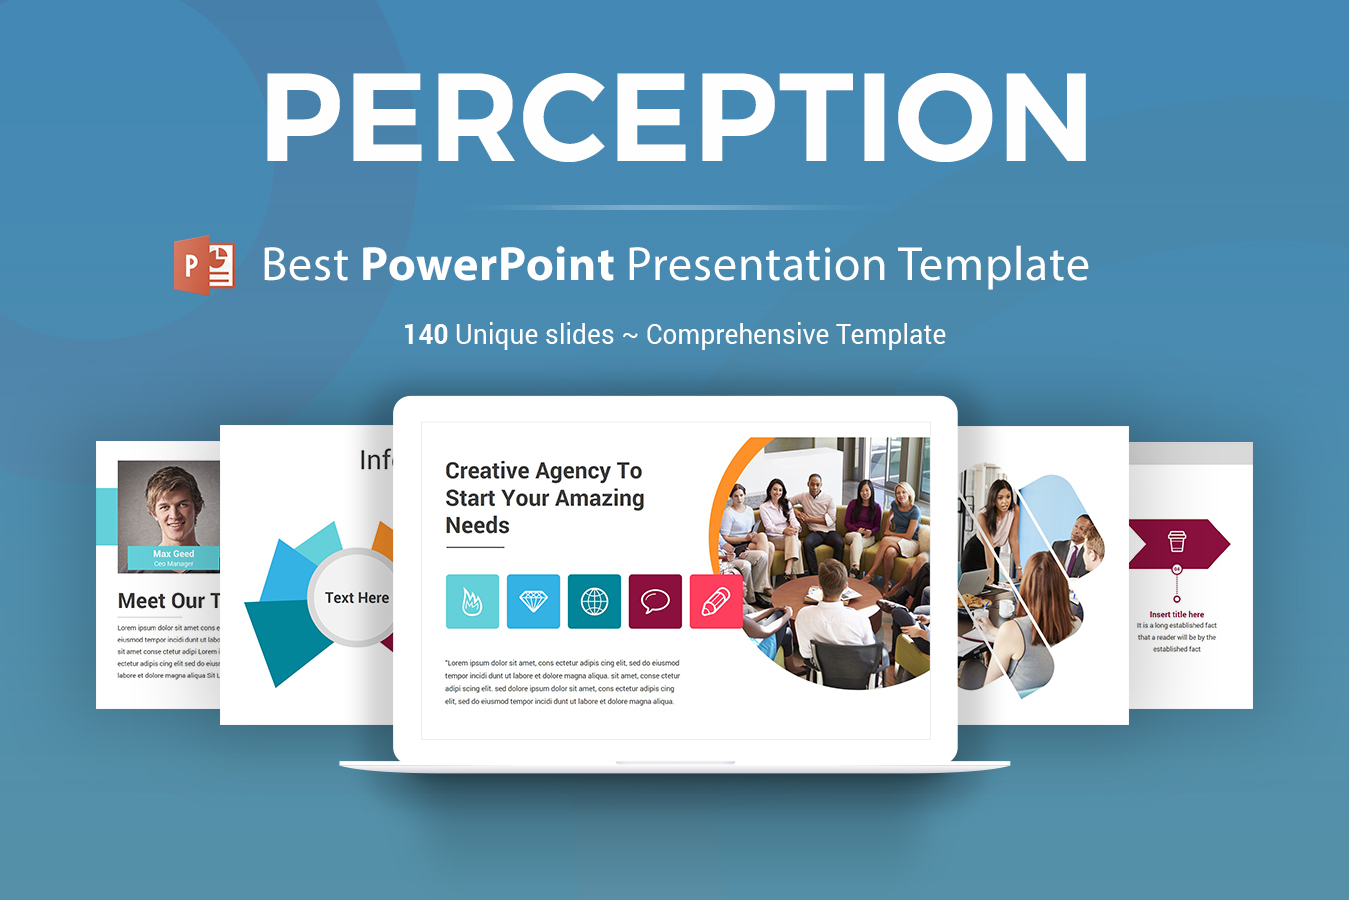 Perception PowerPoint template